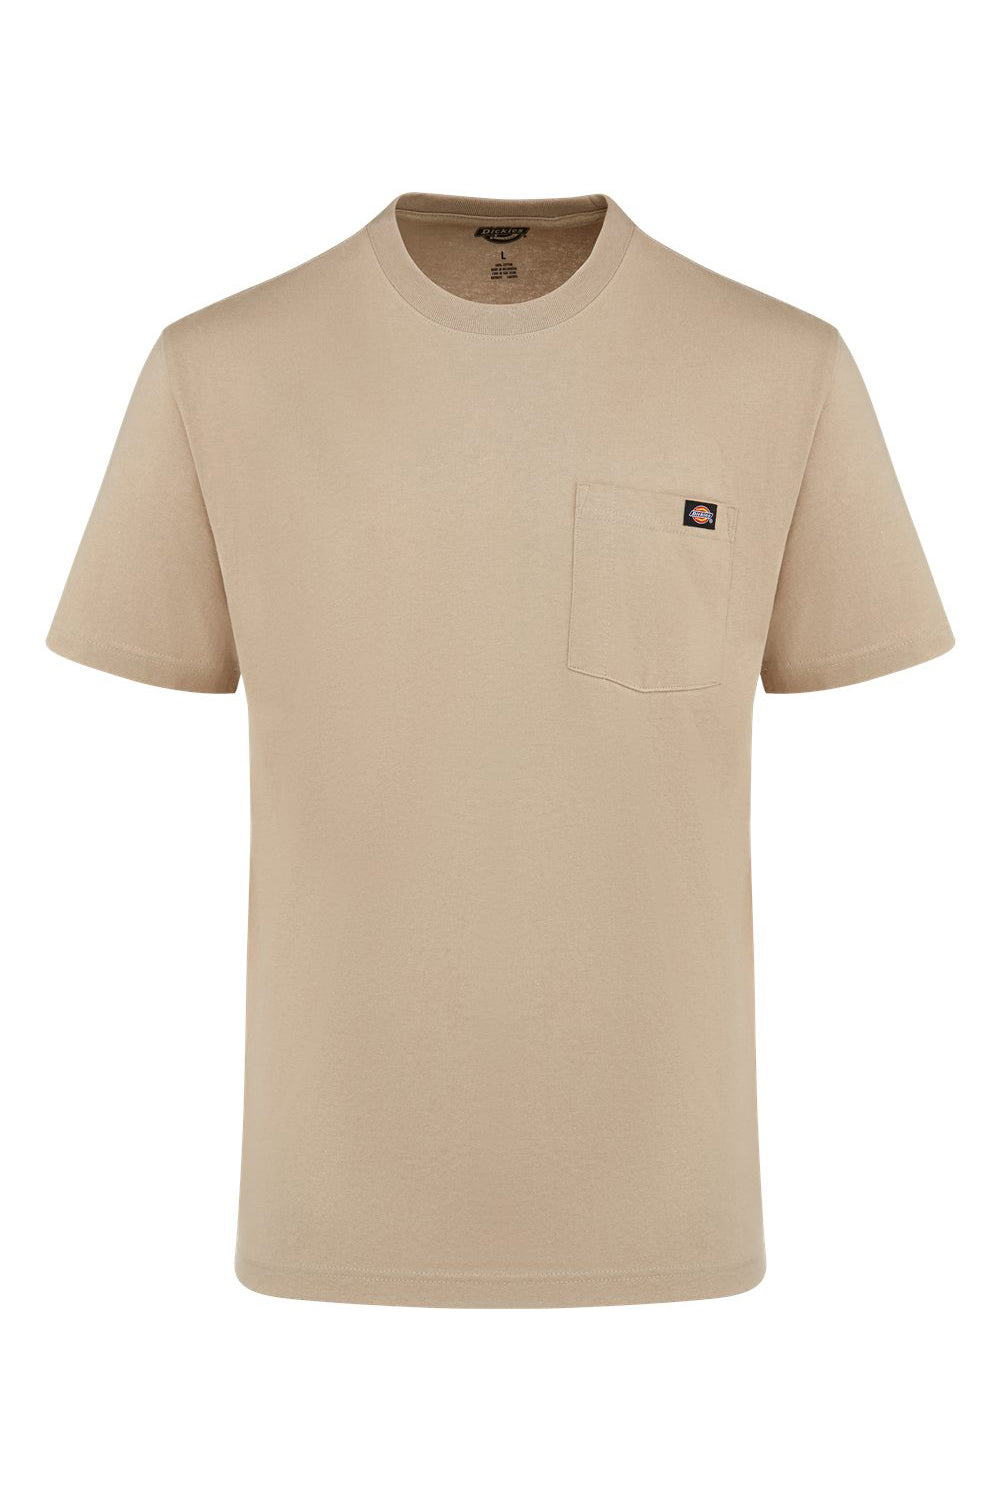 Dickies WS50-D Mens Traditional Short Sleeve Crewneck T-Shirt w/ Pocket Desert Sand Flat Front